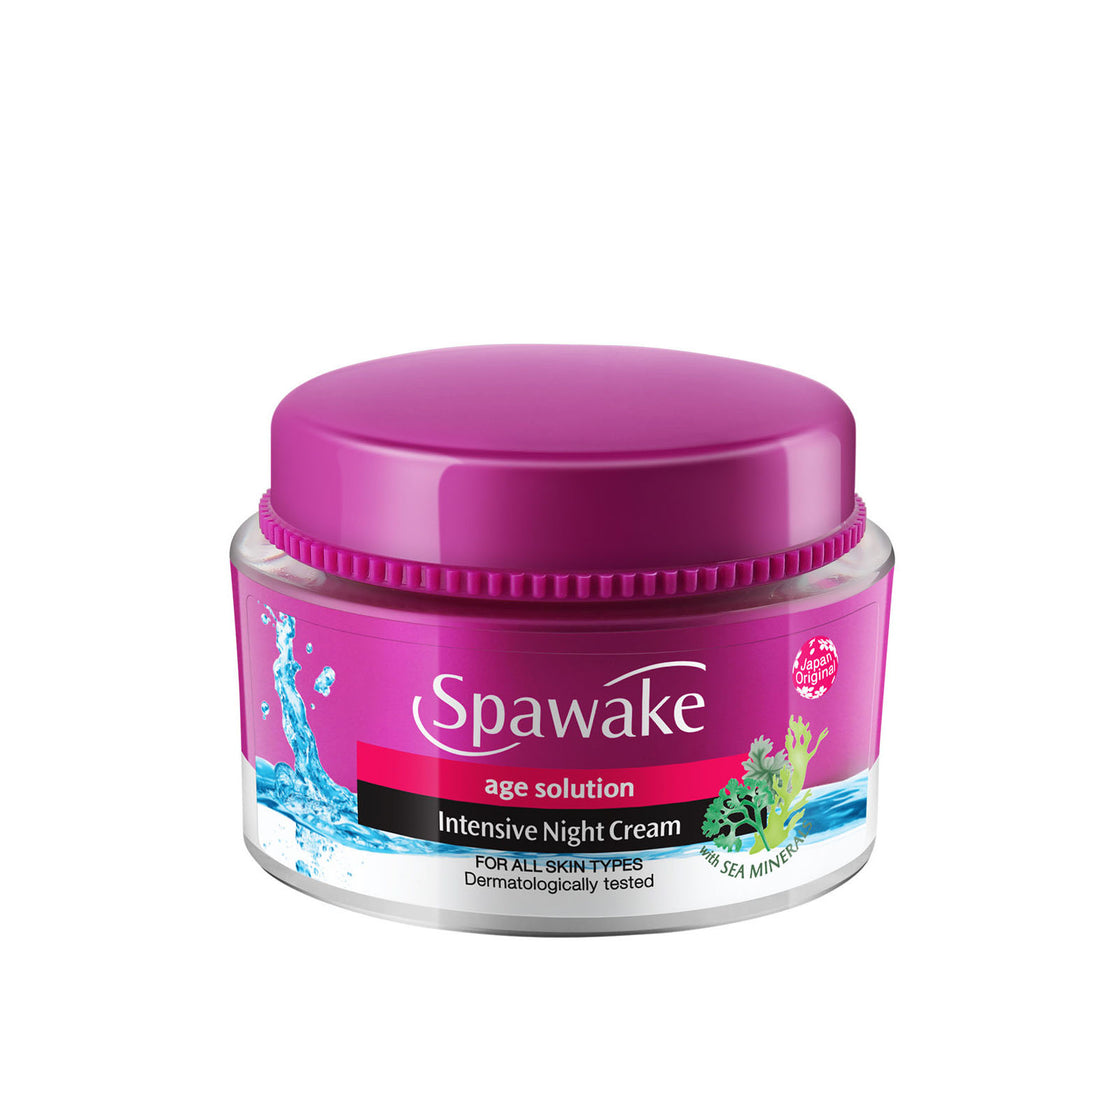 Spawake Age Solution Intensive Night Cream (25G)